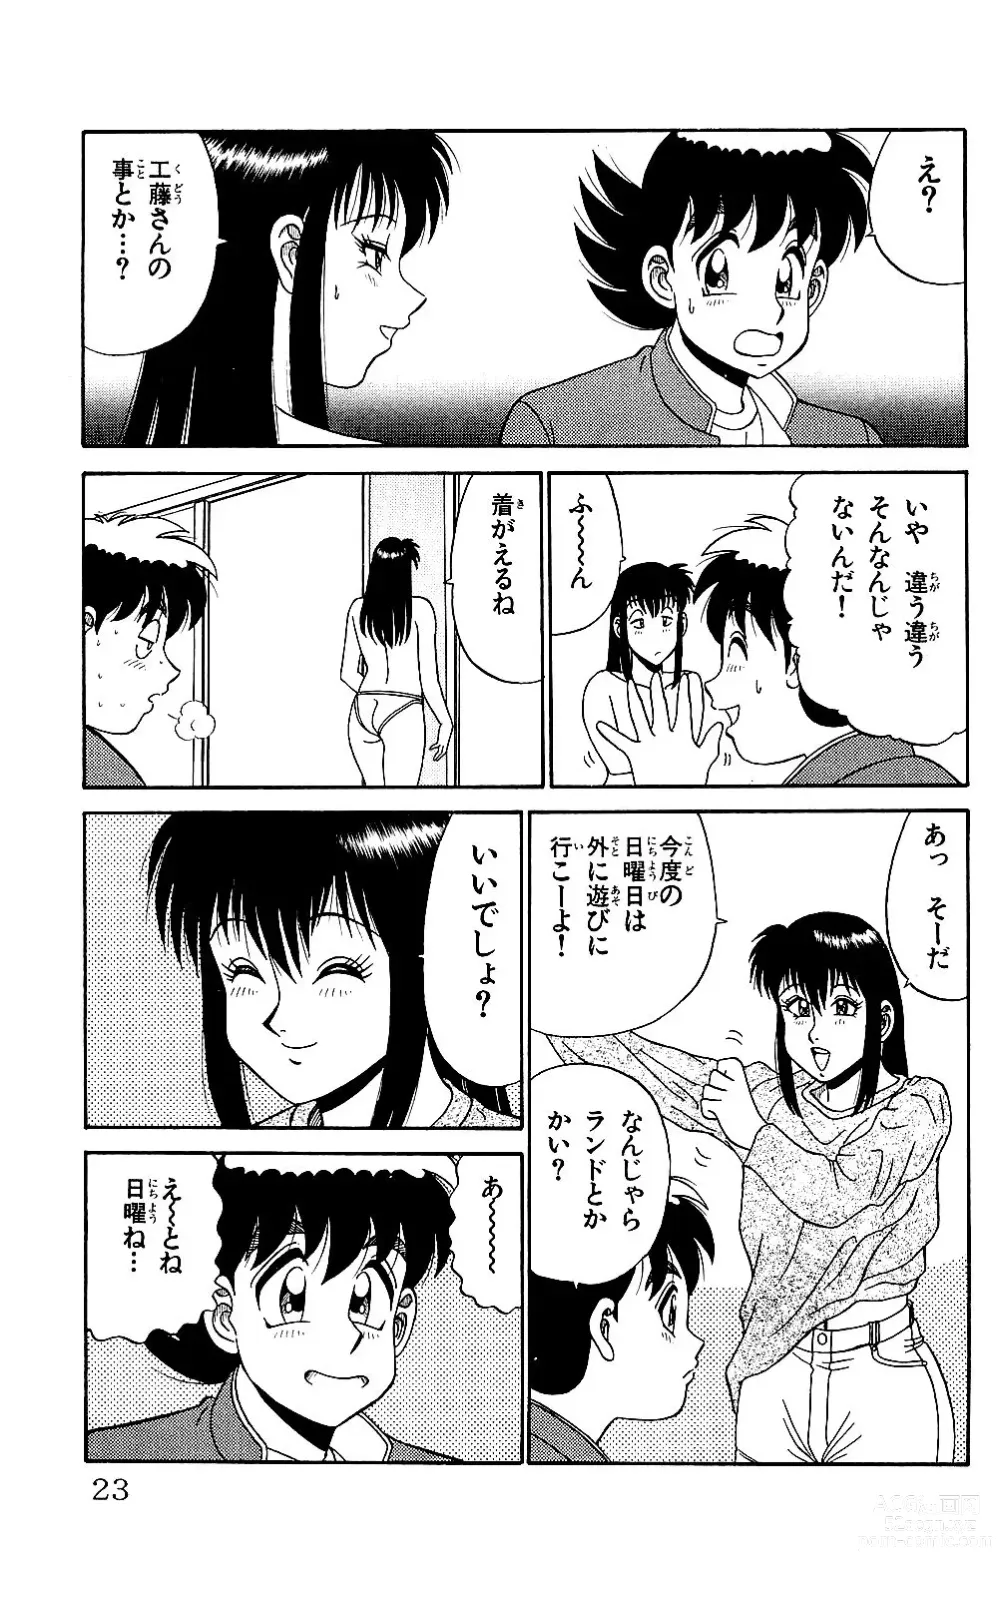 Page 21 of manga Orette Piyoritan 05